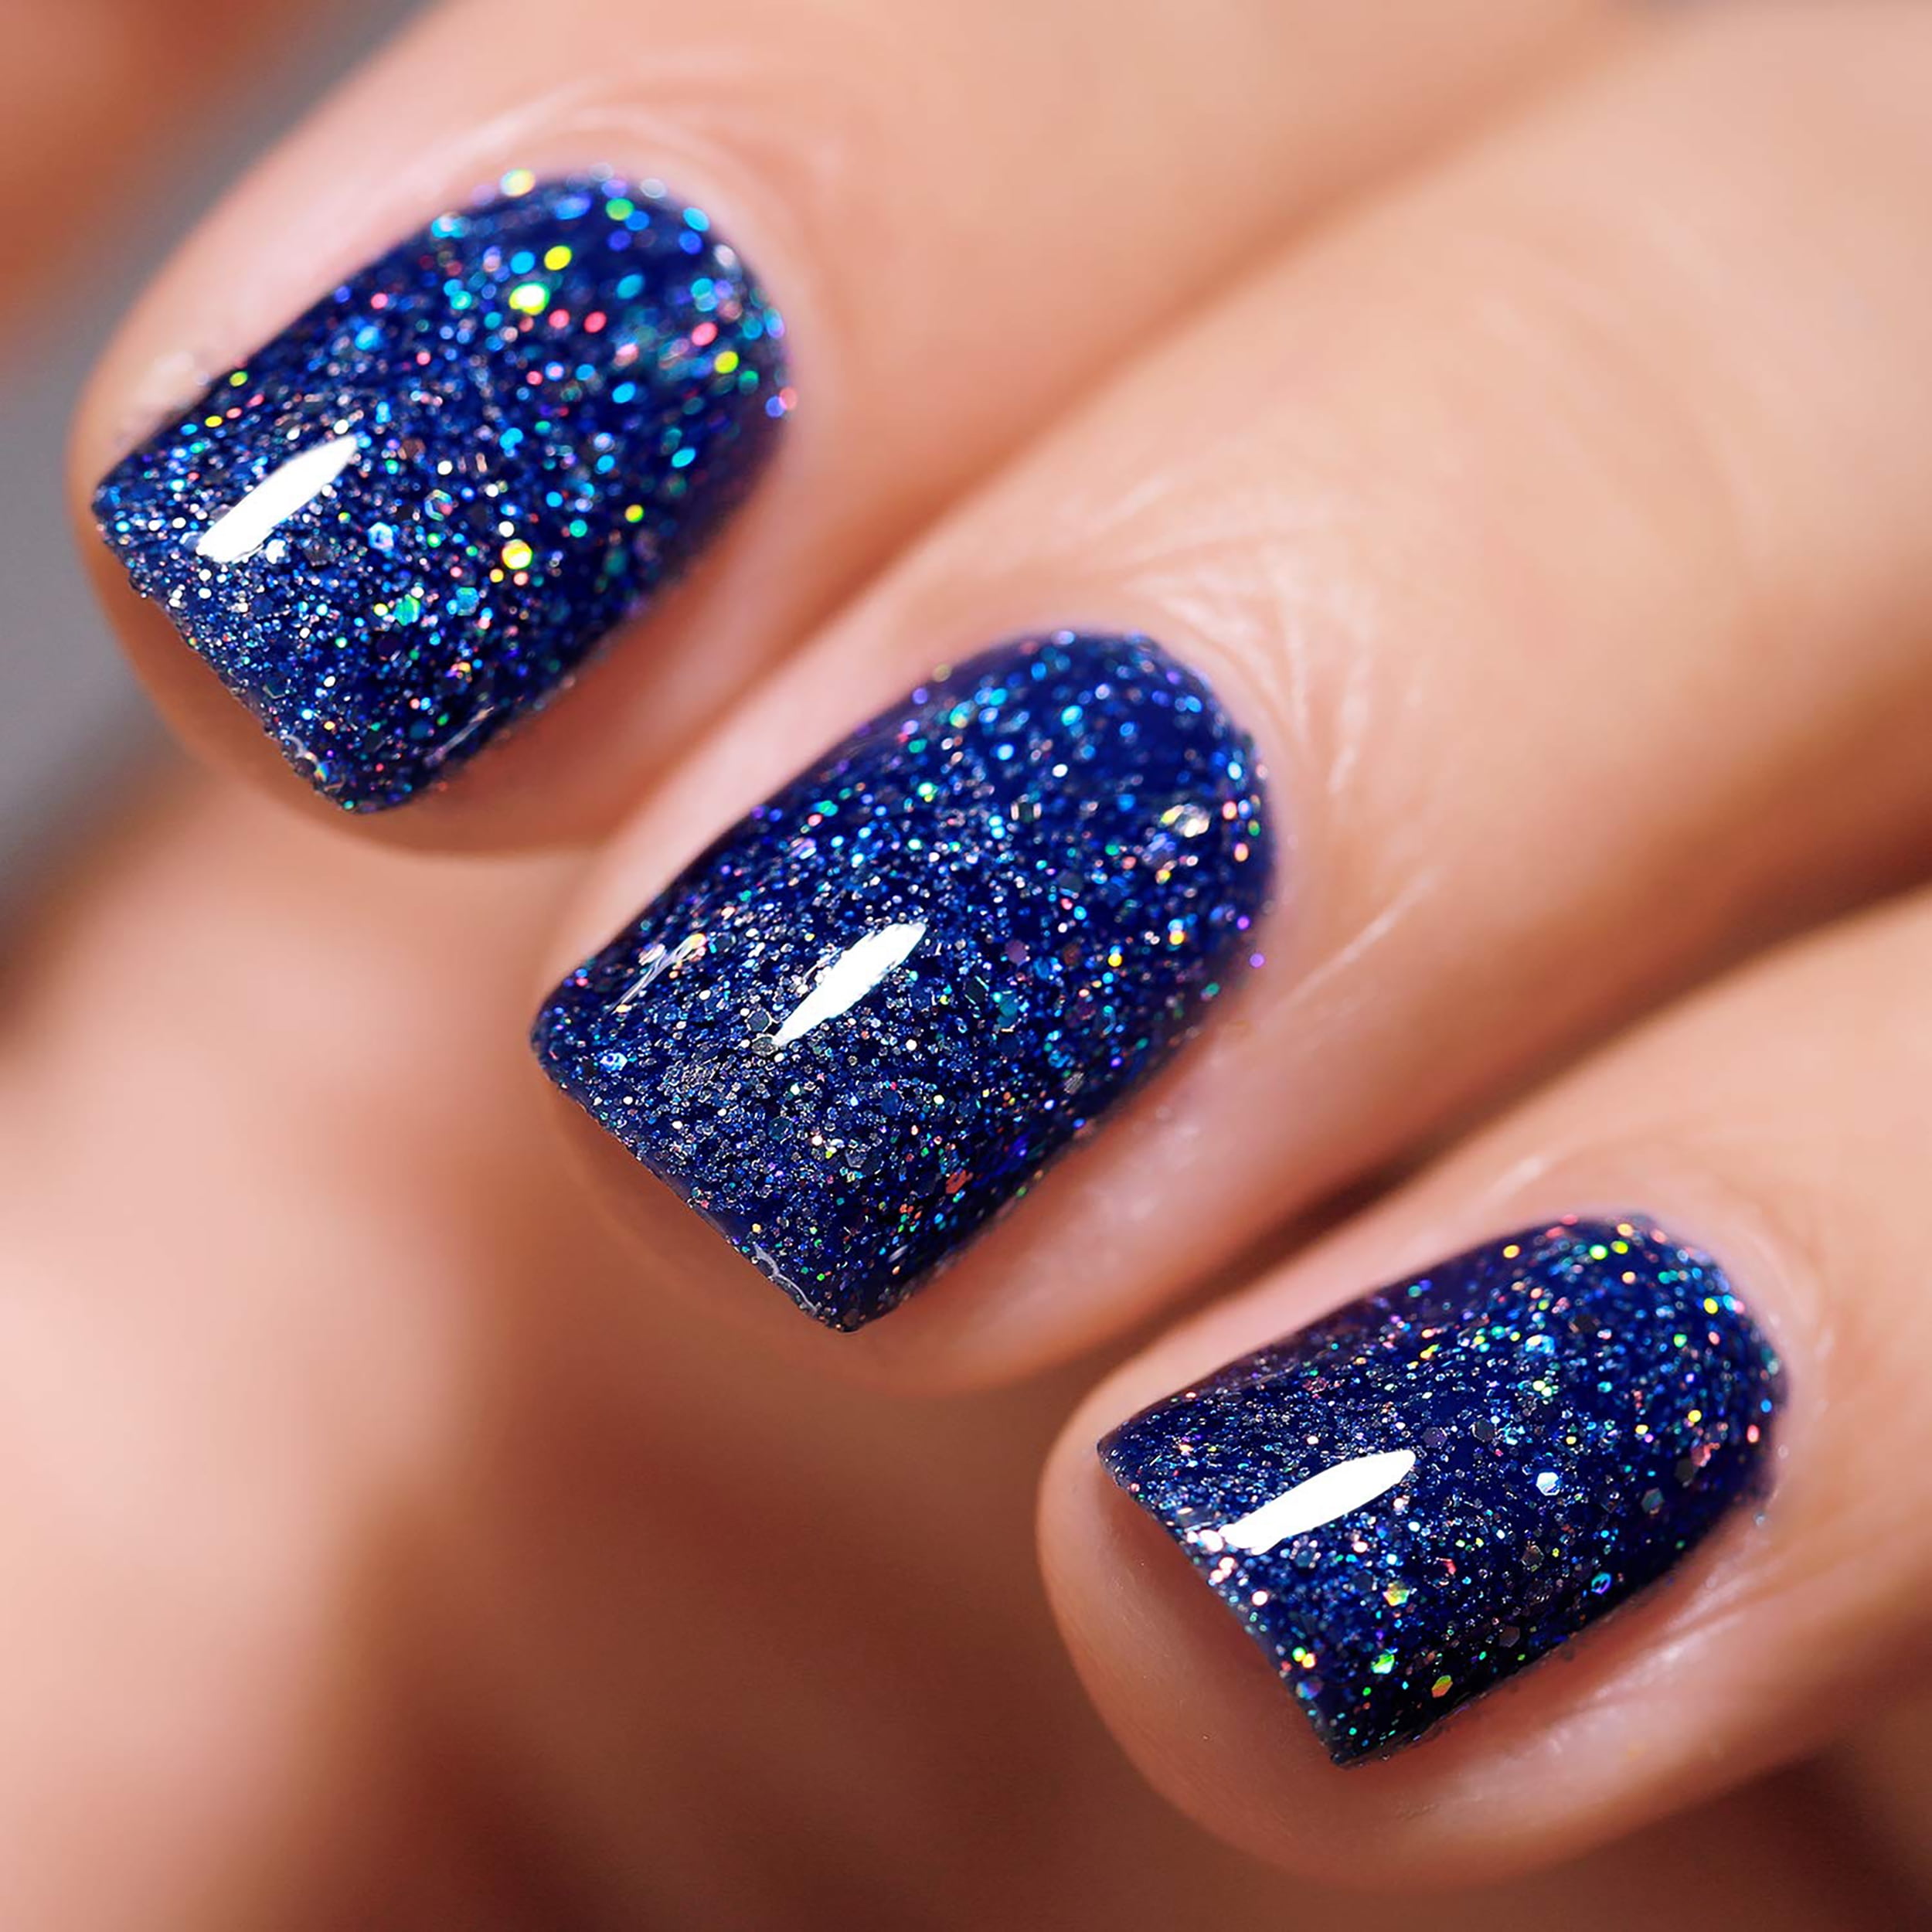 FZANEST Sparkle Glitter Gel Nail Polish Led UV Gel Polish Fall Winter Color  15ml (Diamond Navy Blue) 